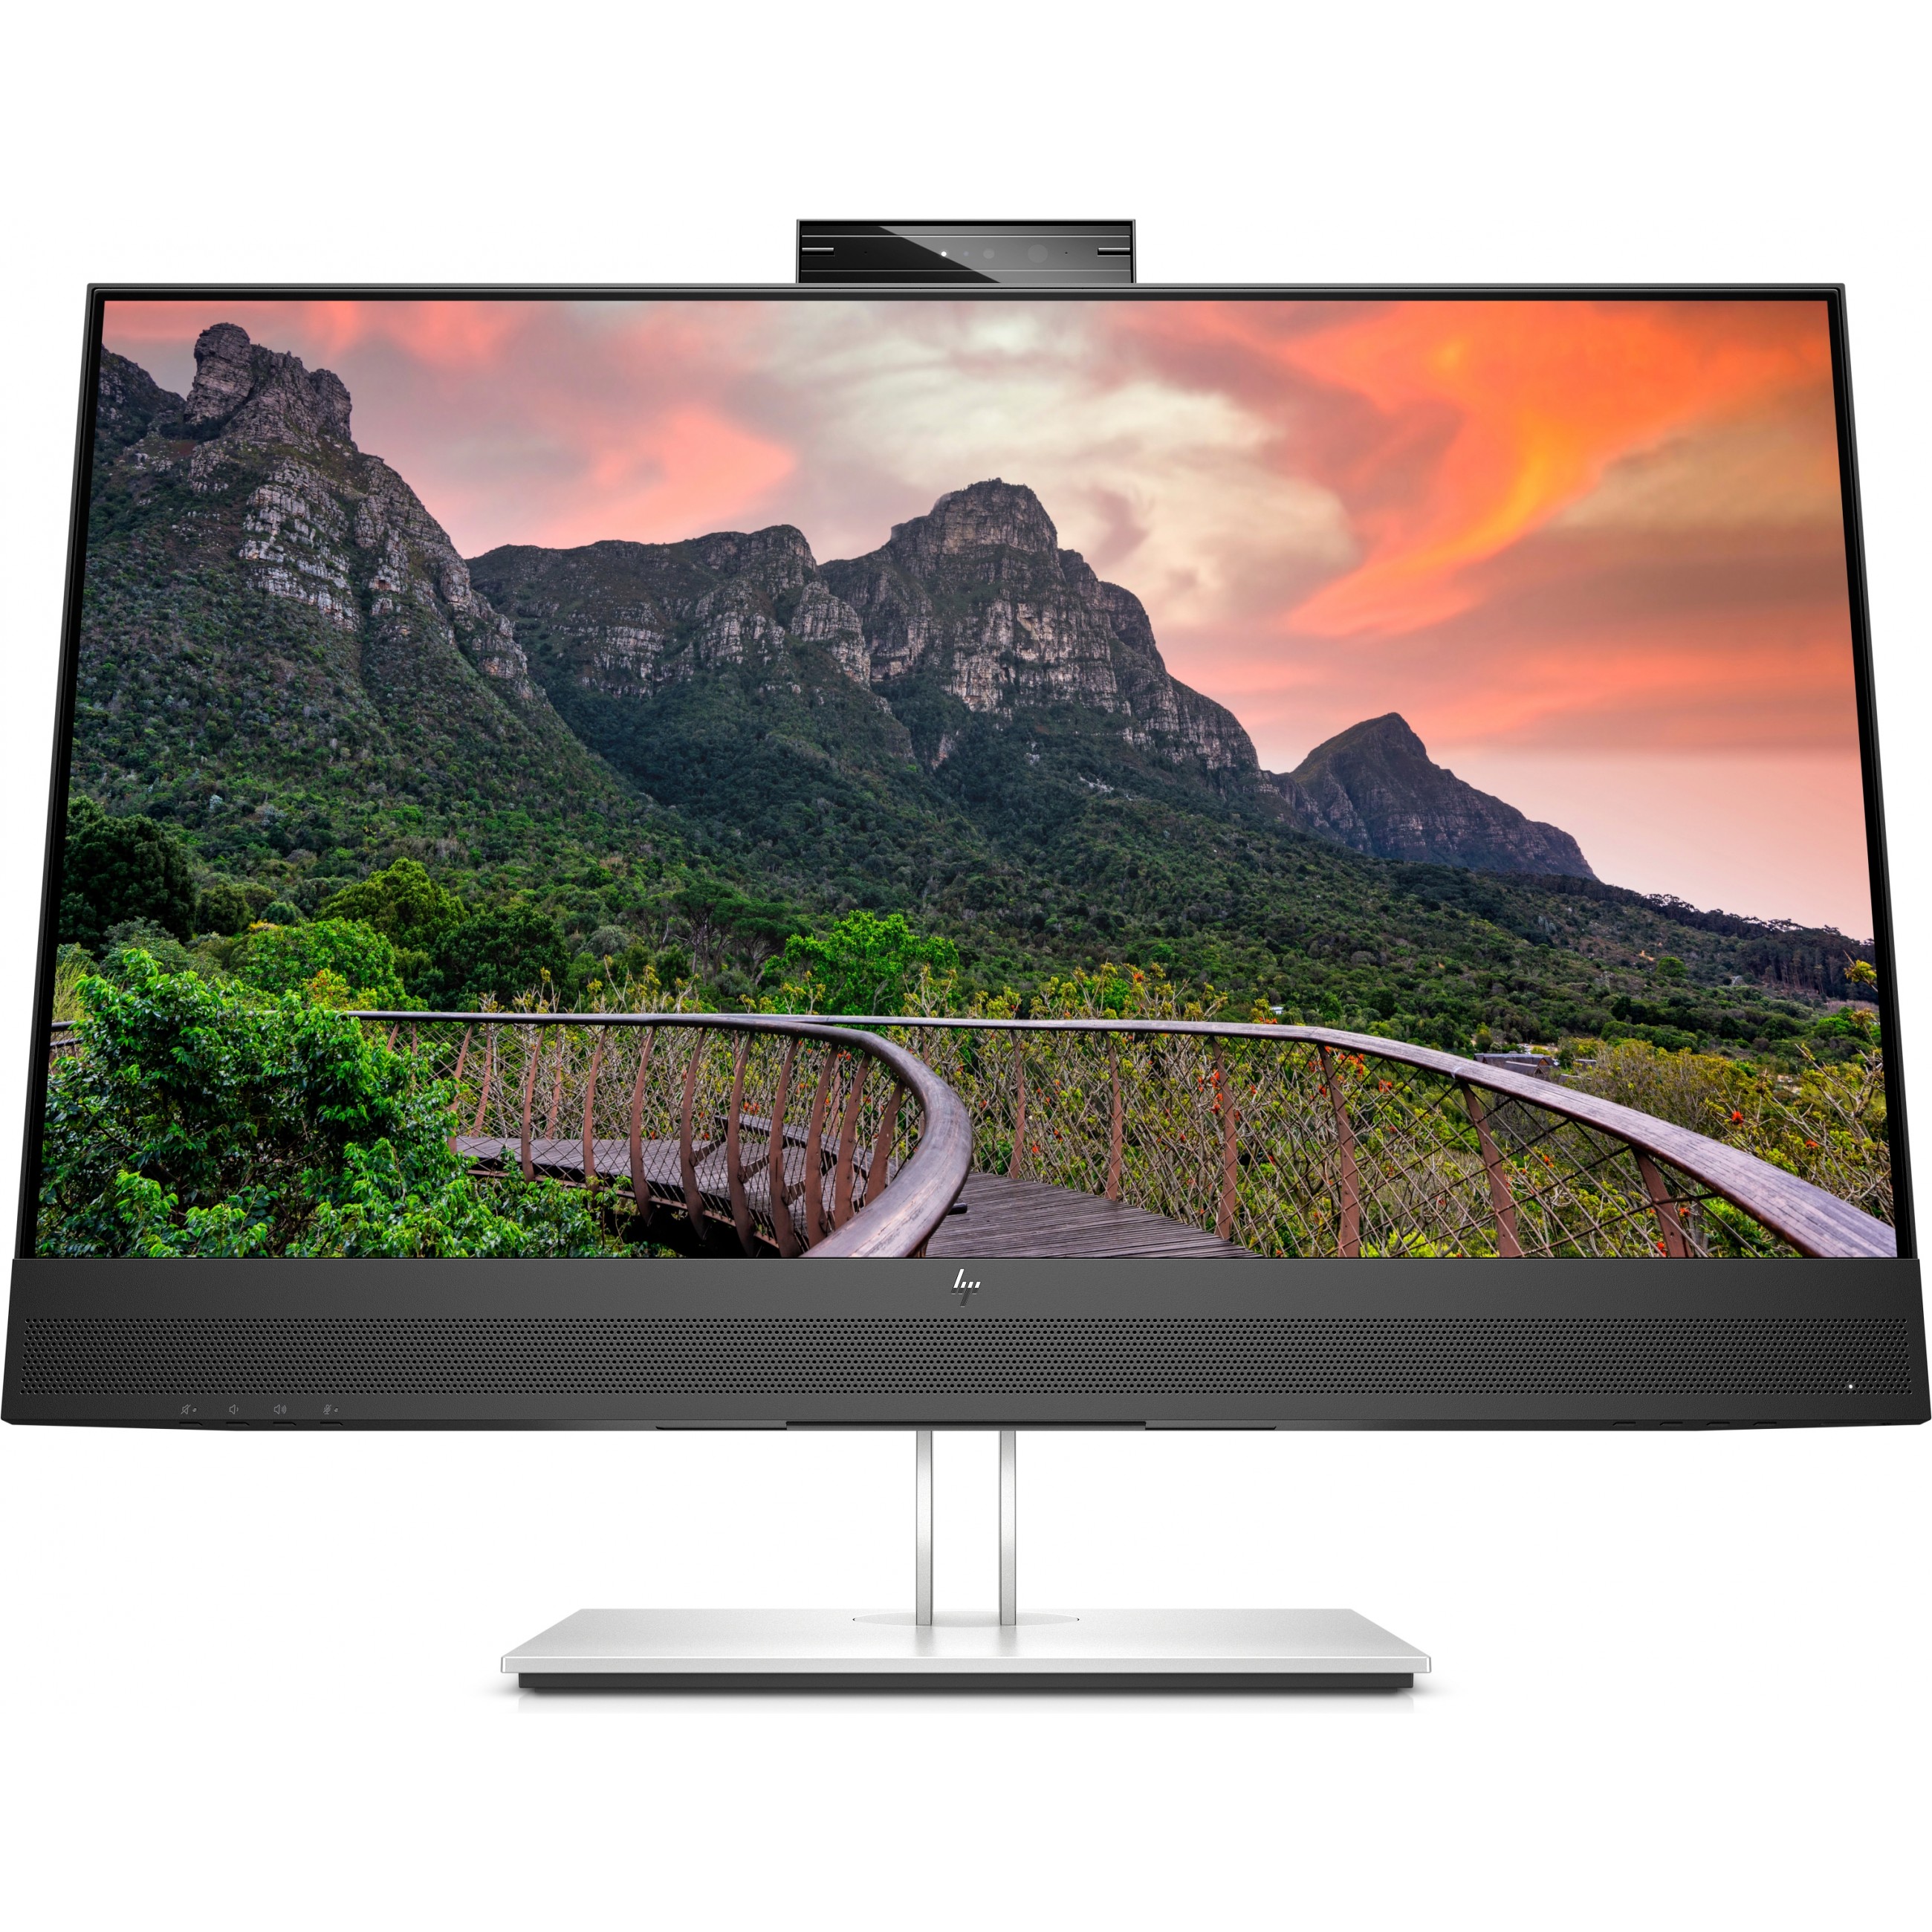 HP E-Series E27m G4 computer monitor